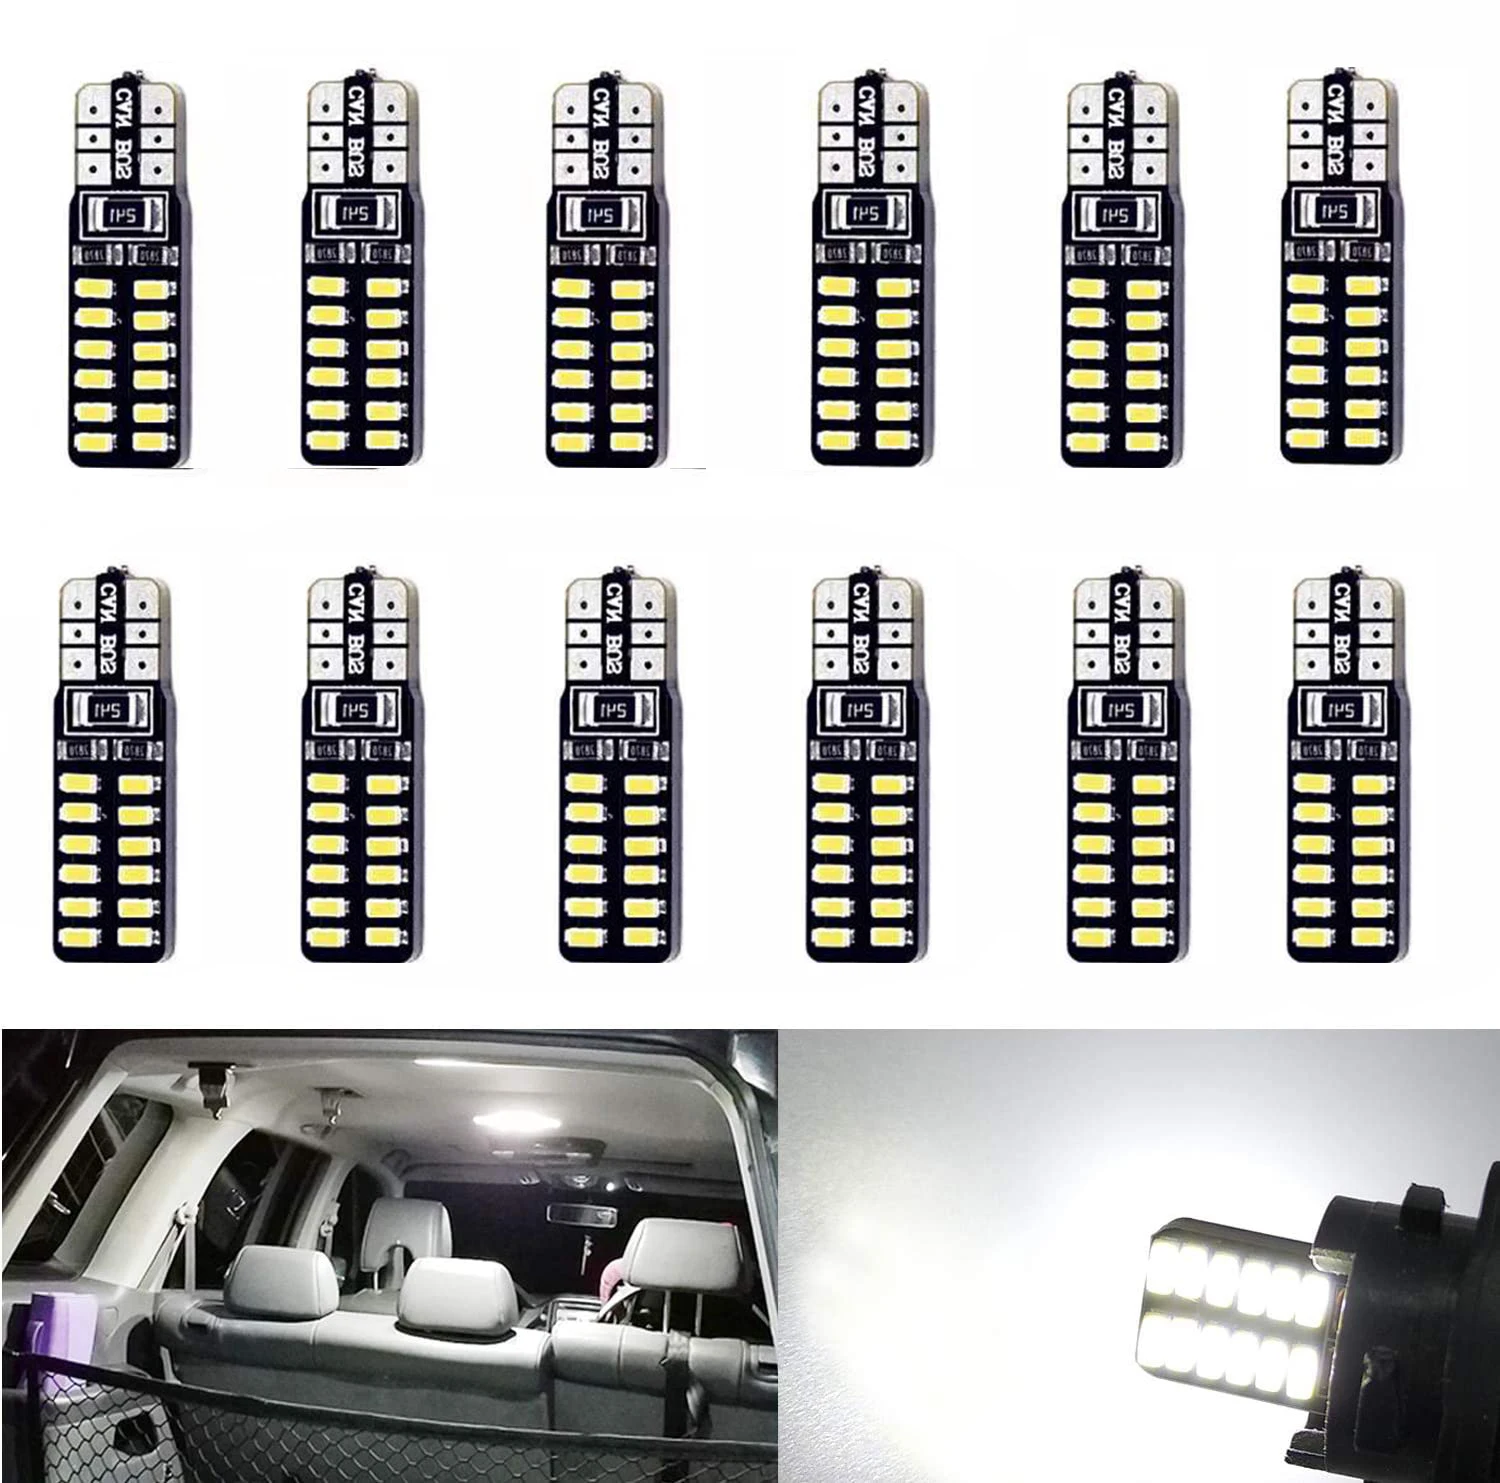 

10/2pcs Car T10 LED 194 168 W5W 3014 SMD 24 LED Auto Clearance Light Parking lamps Side Light Bulb DC12V